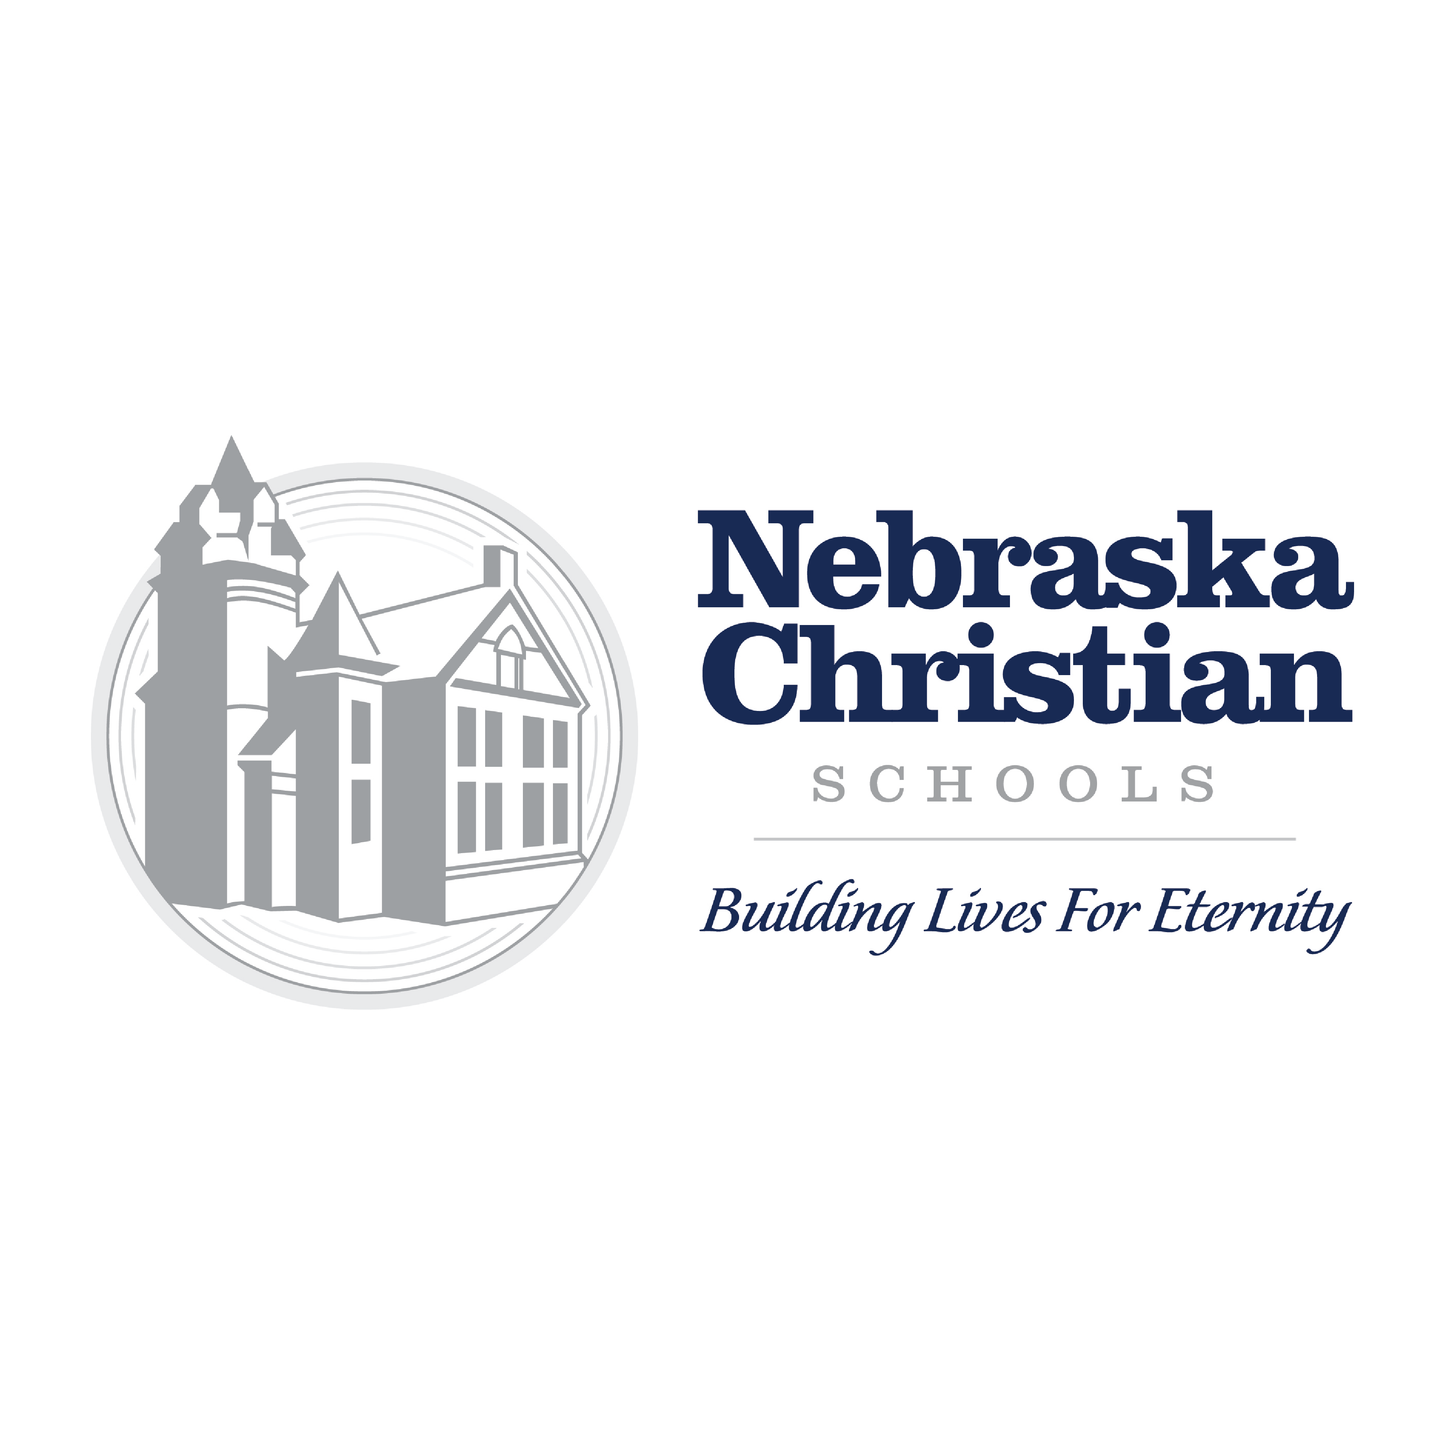 Nebraska Christian Schools